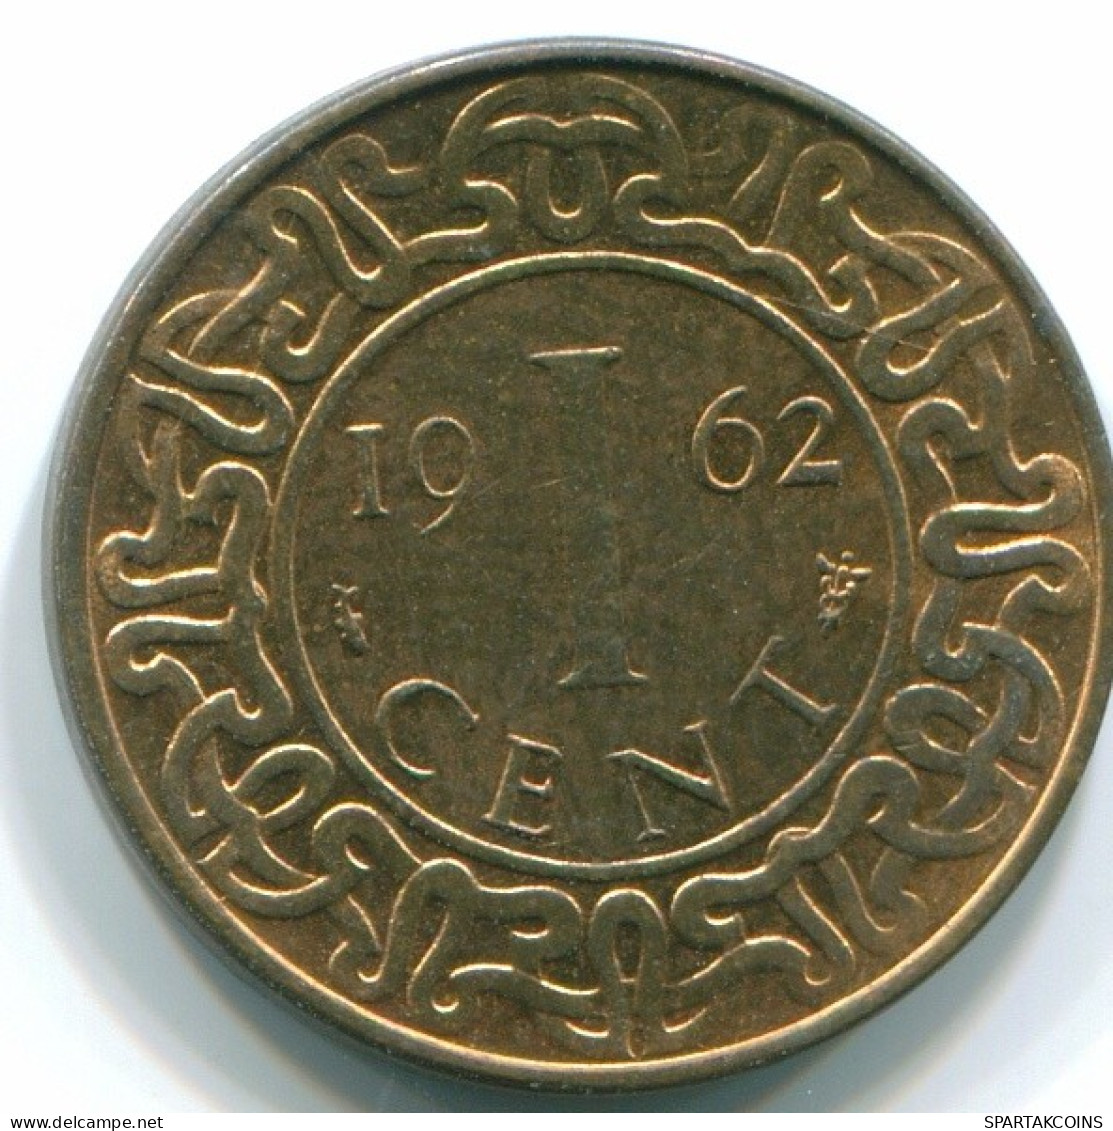 1 CENT 1962 SURINAME Netherlands Bronze Fish Colonial Coin #S10922.U.A - Surinam 1975 - ...